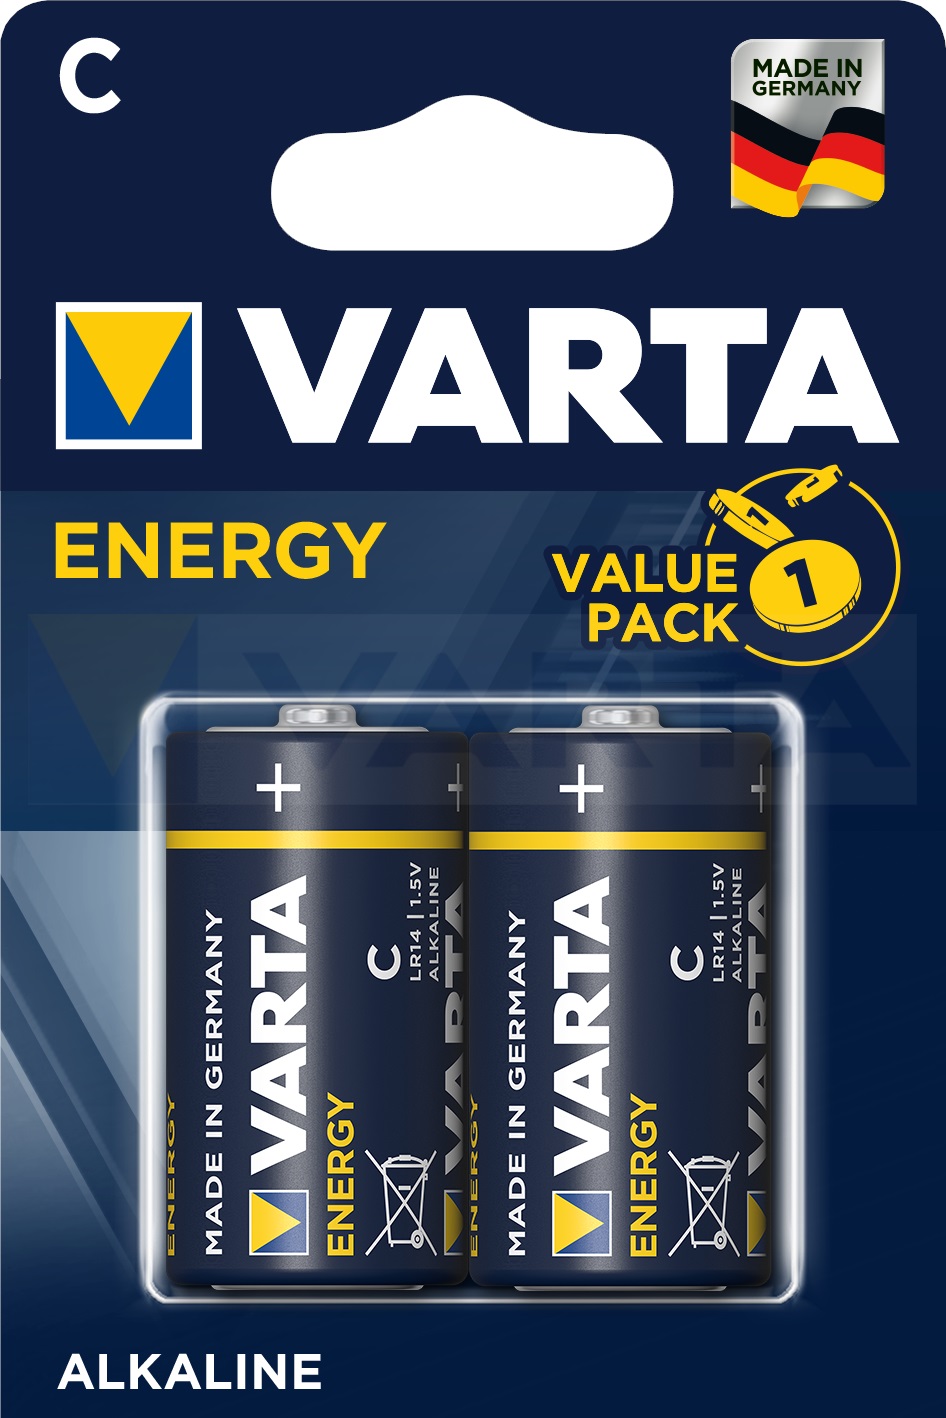 Батарейки VARTA ENERGY C бл. 2